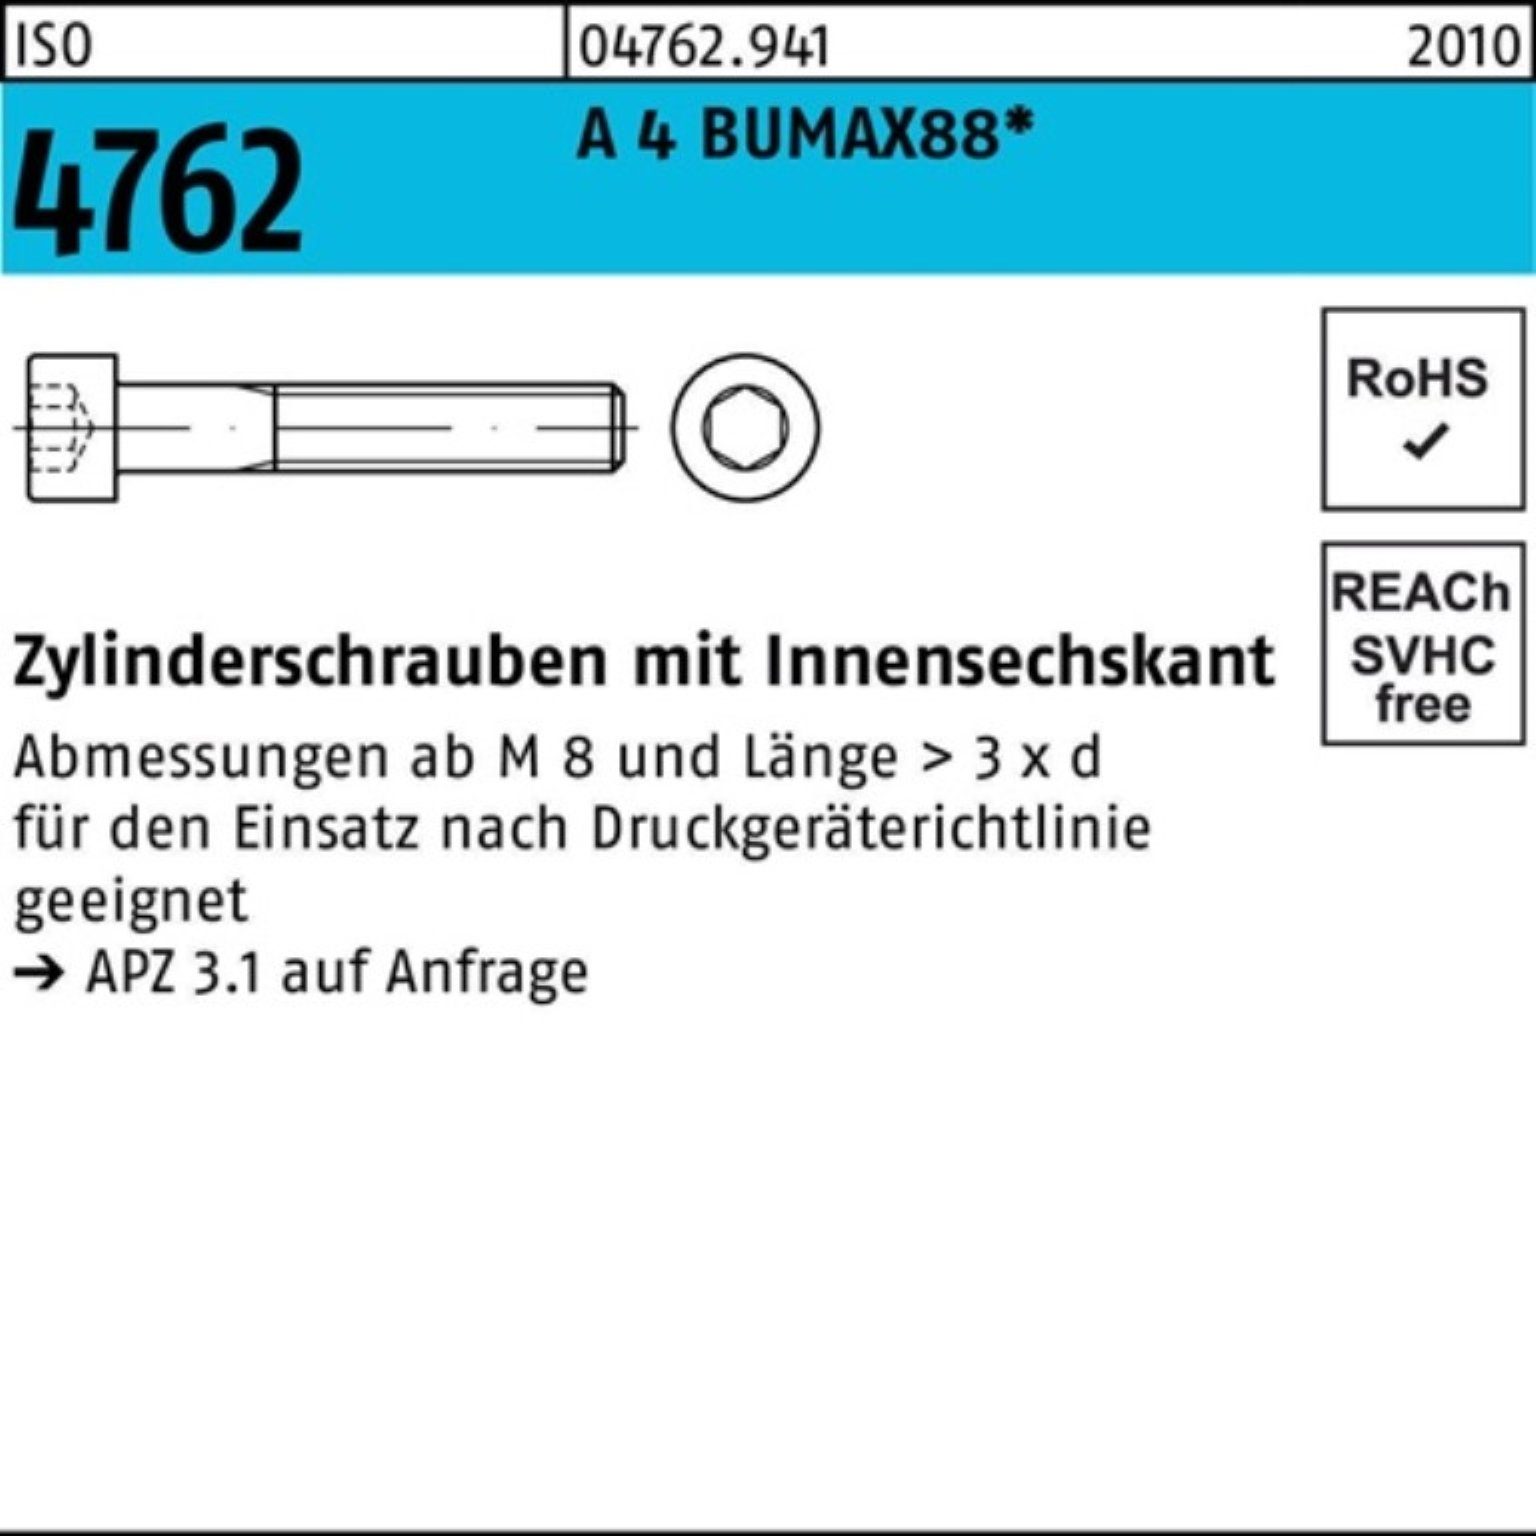 4 Pack A 100er Zylinderschraube Zylinderschraube M16x ISO BUMAX88 25 Bufab 4762 Innen-6kt 45